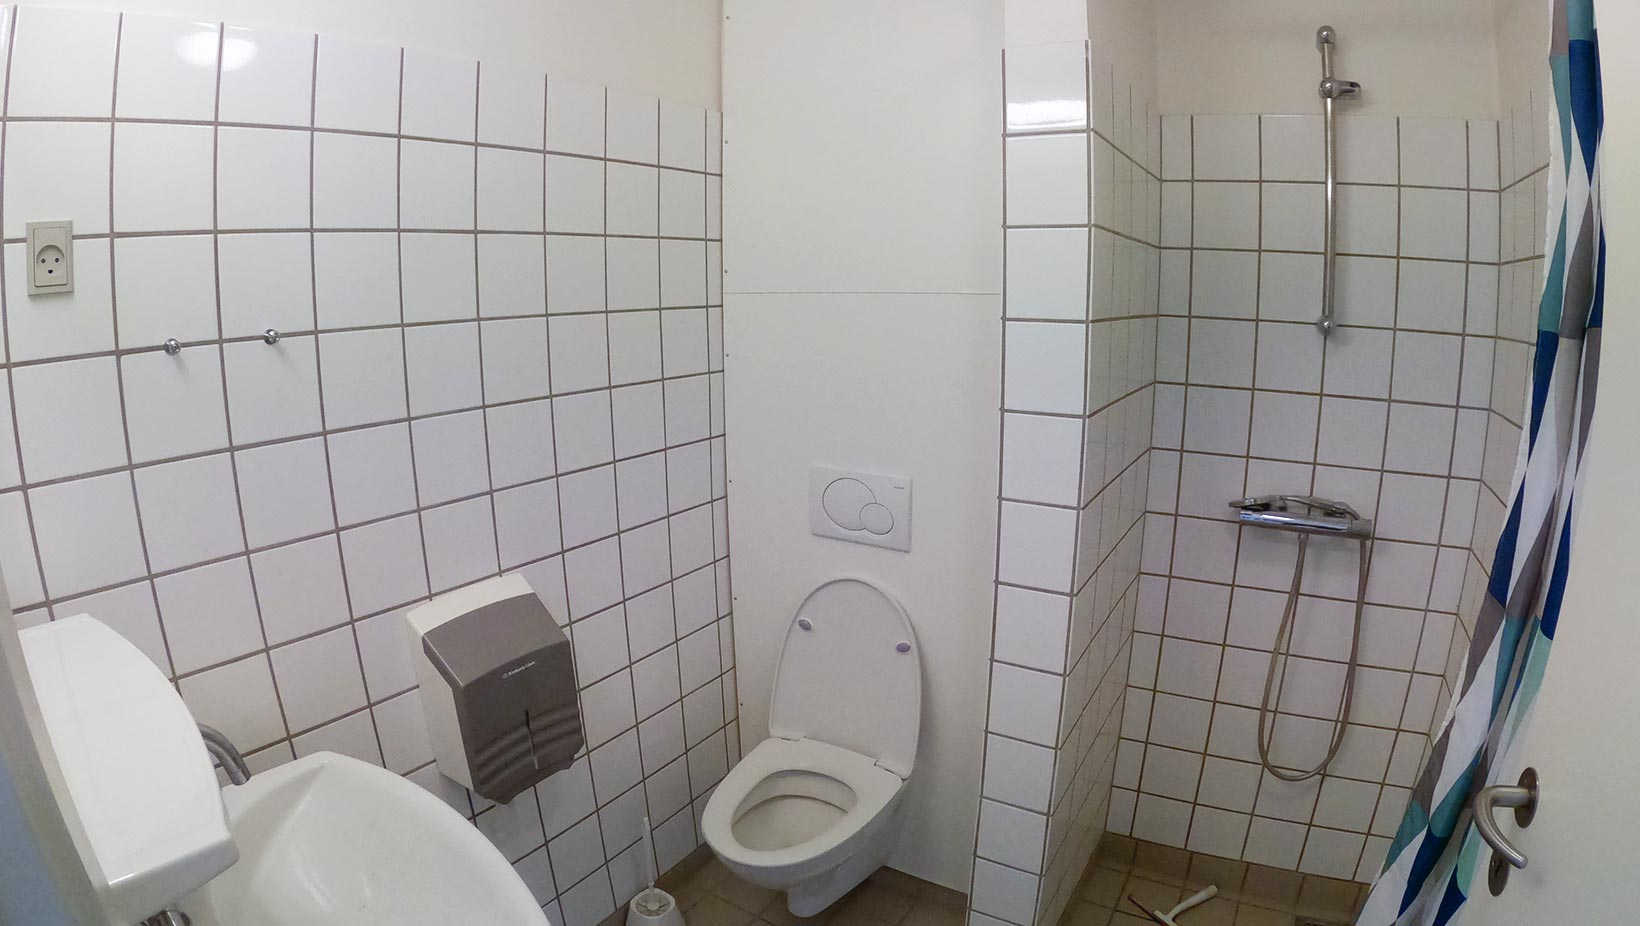 Ny_Lejlighed_Toilet